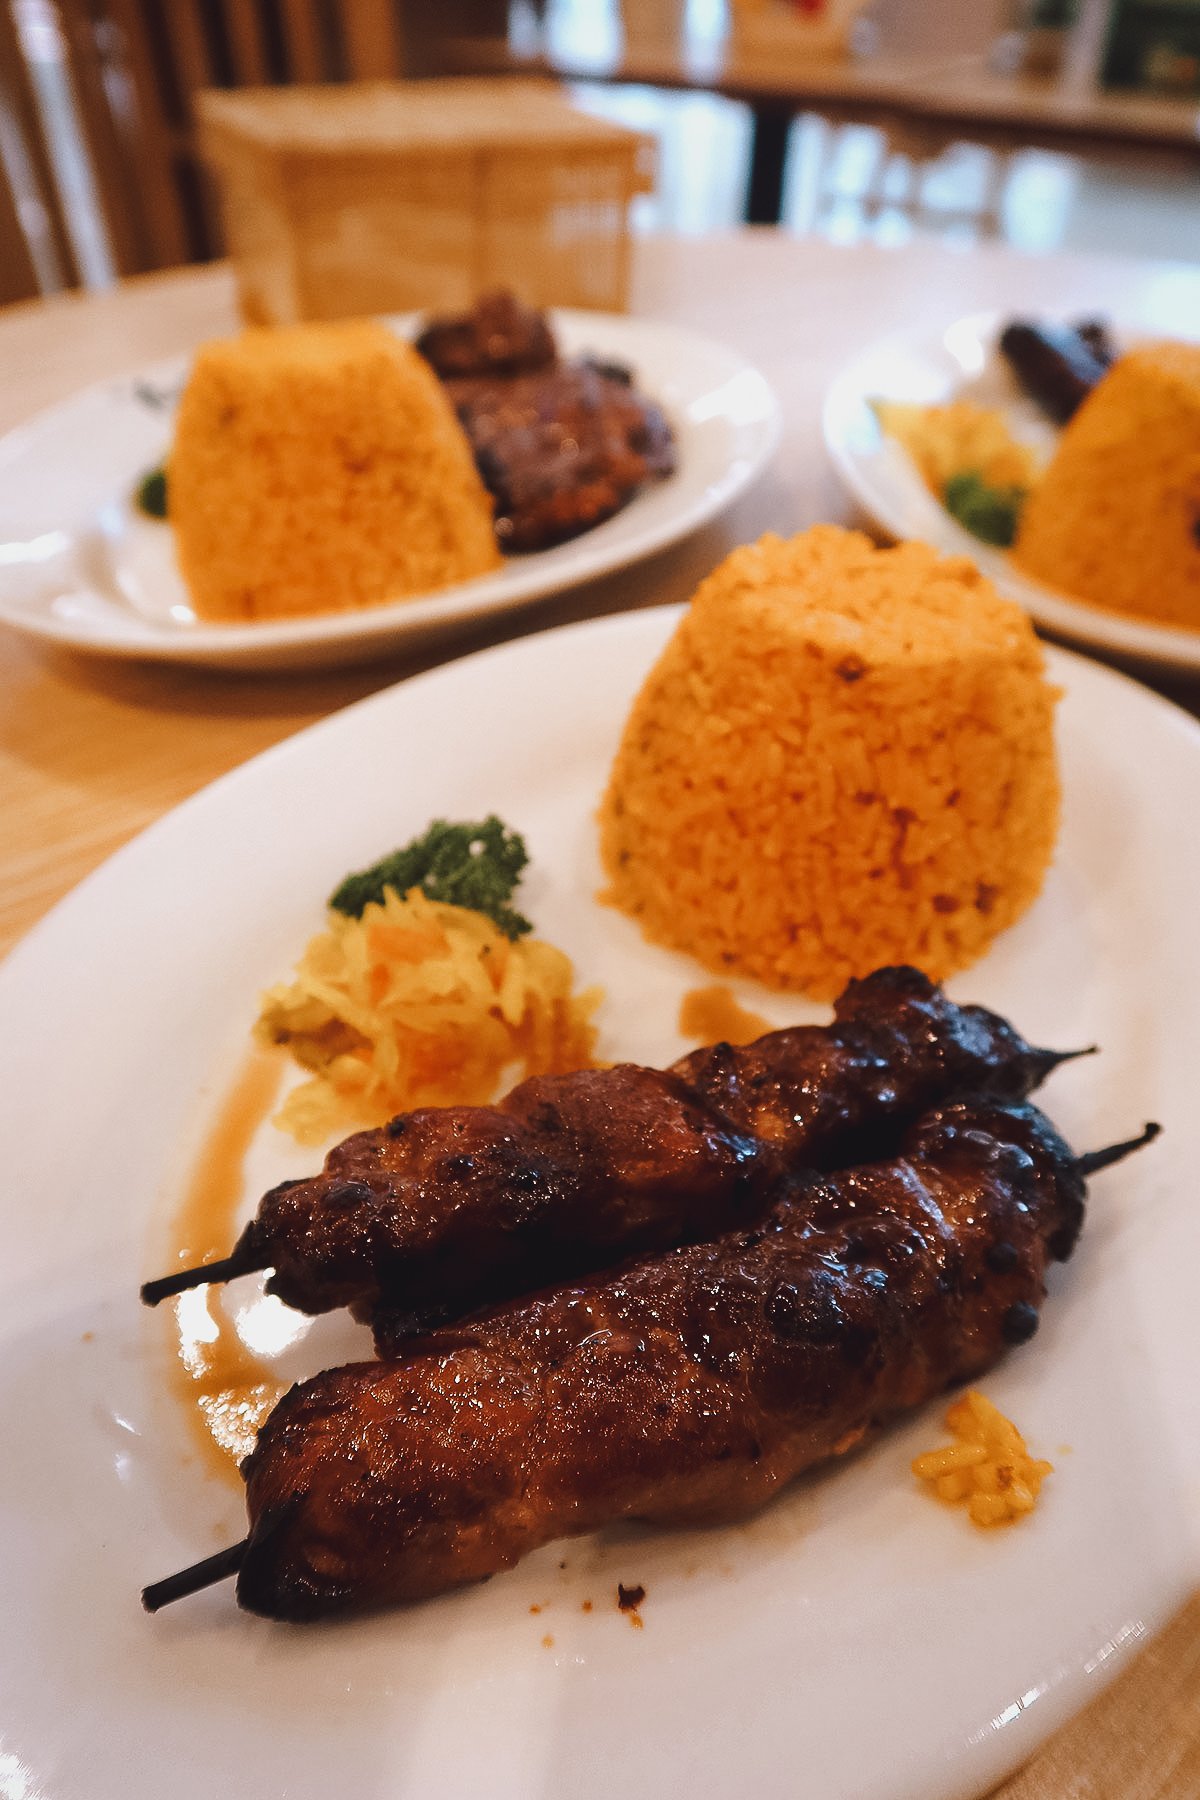 Pork barbecue at a restaurant in Manila